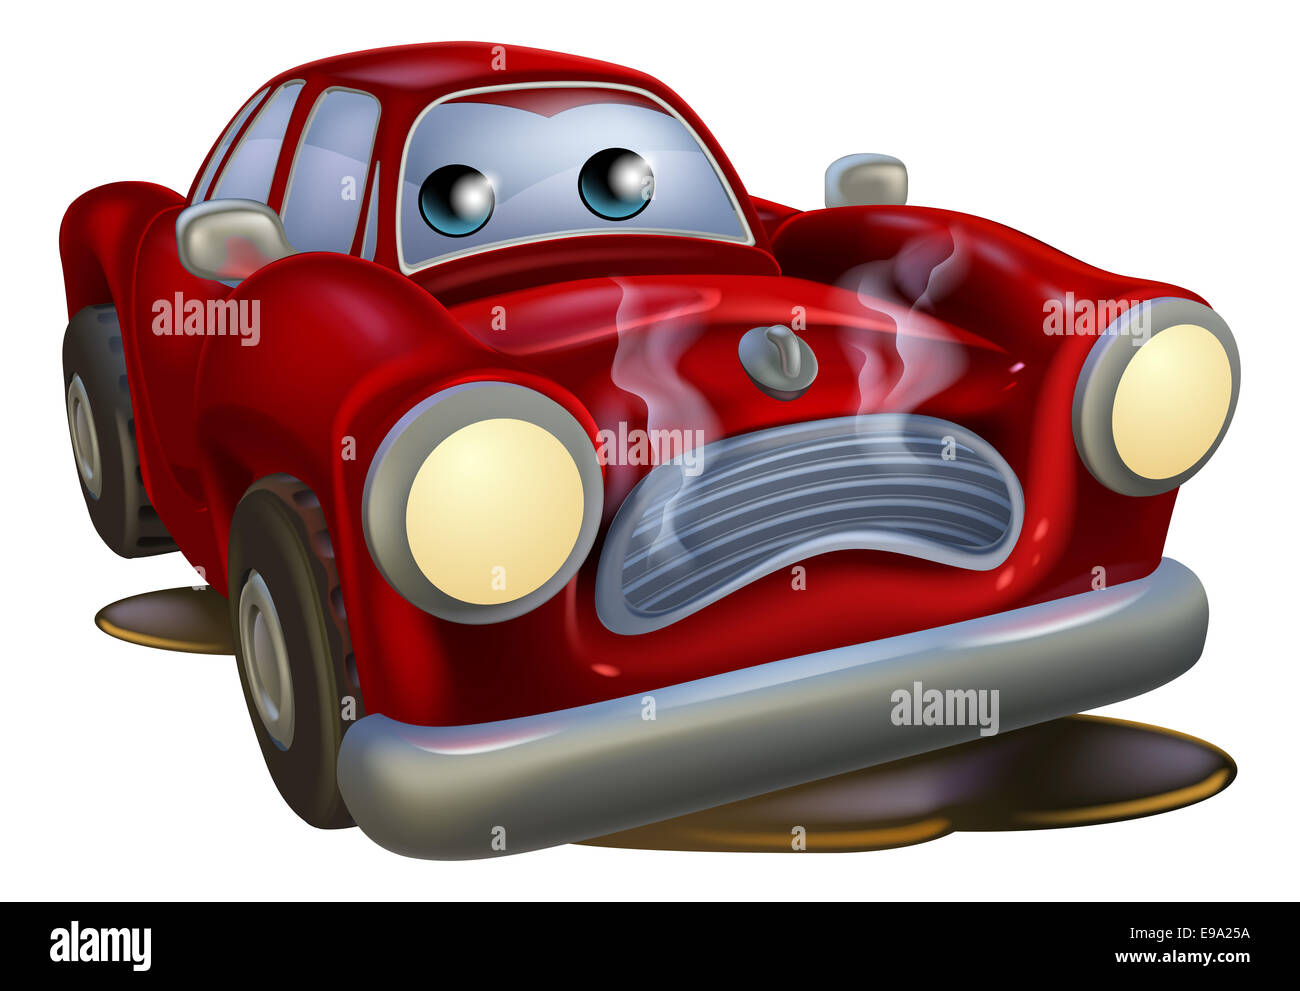 A sad broken down cartoon car character in need of repair Stock Photo